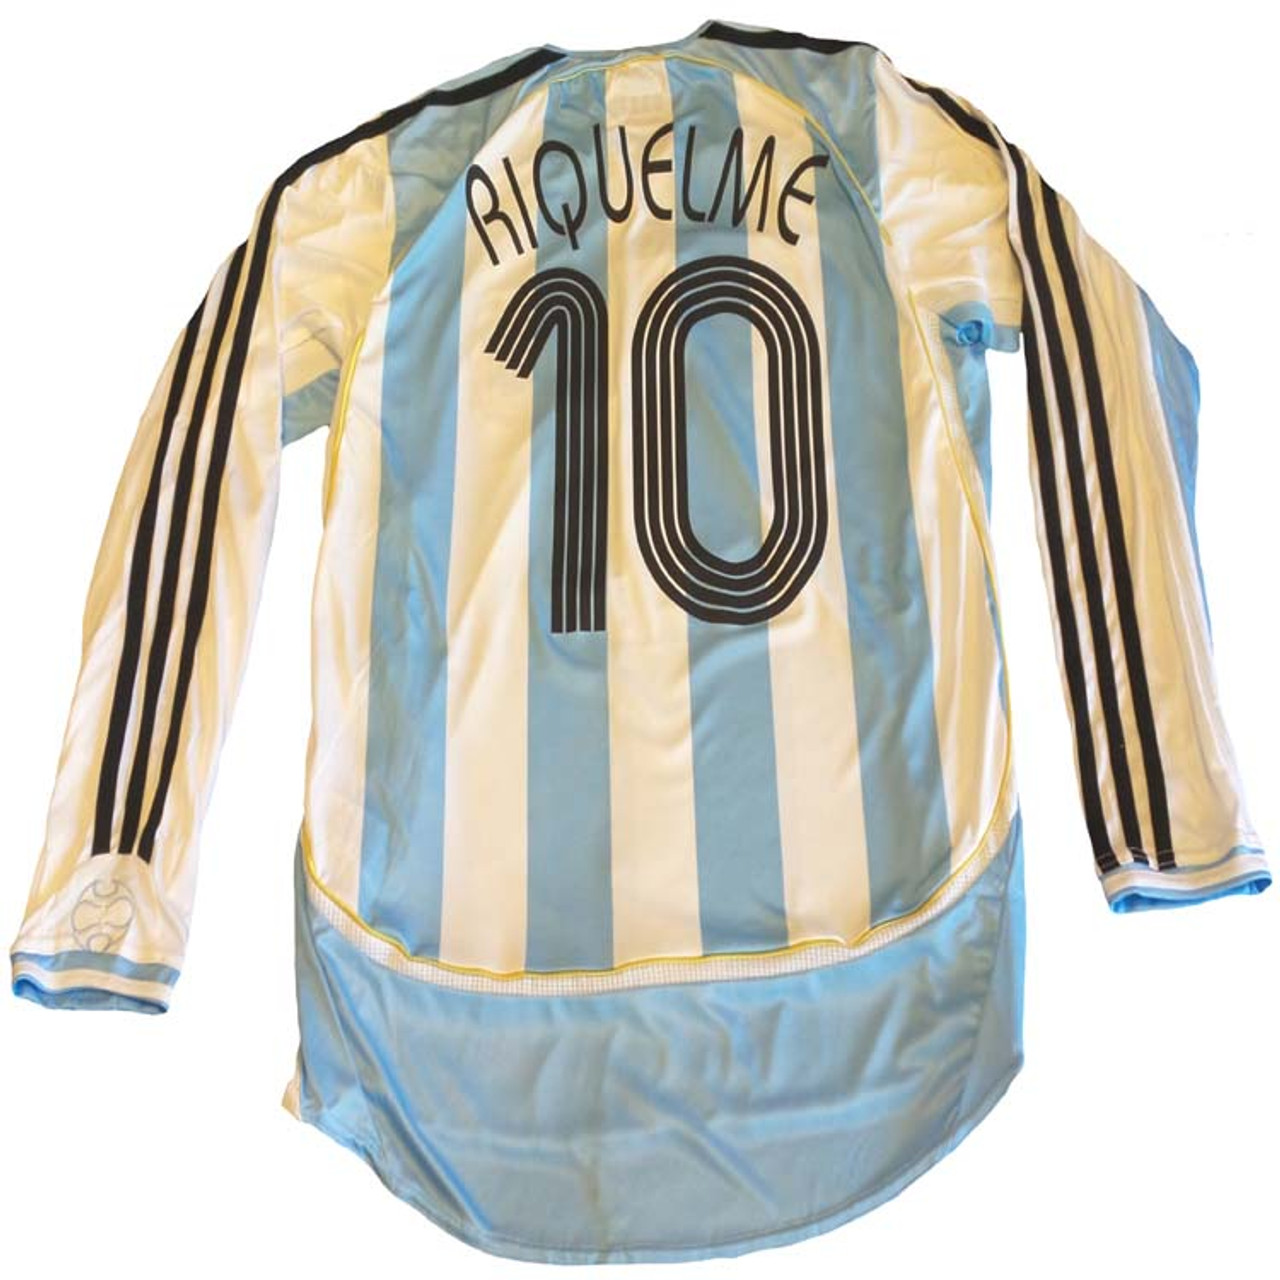 argentina jersey 2006